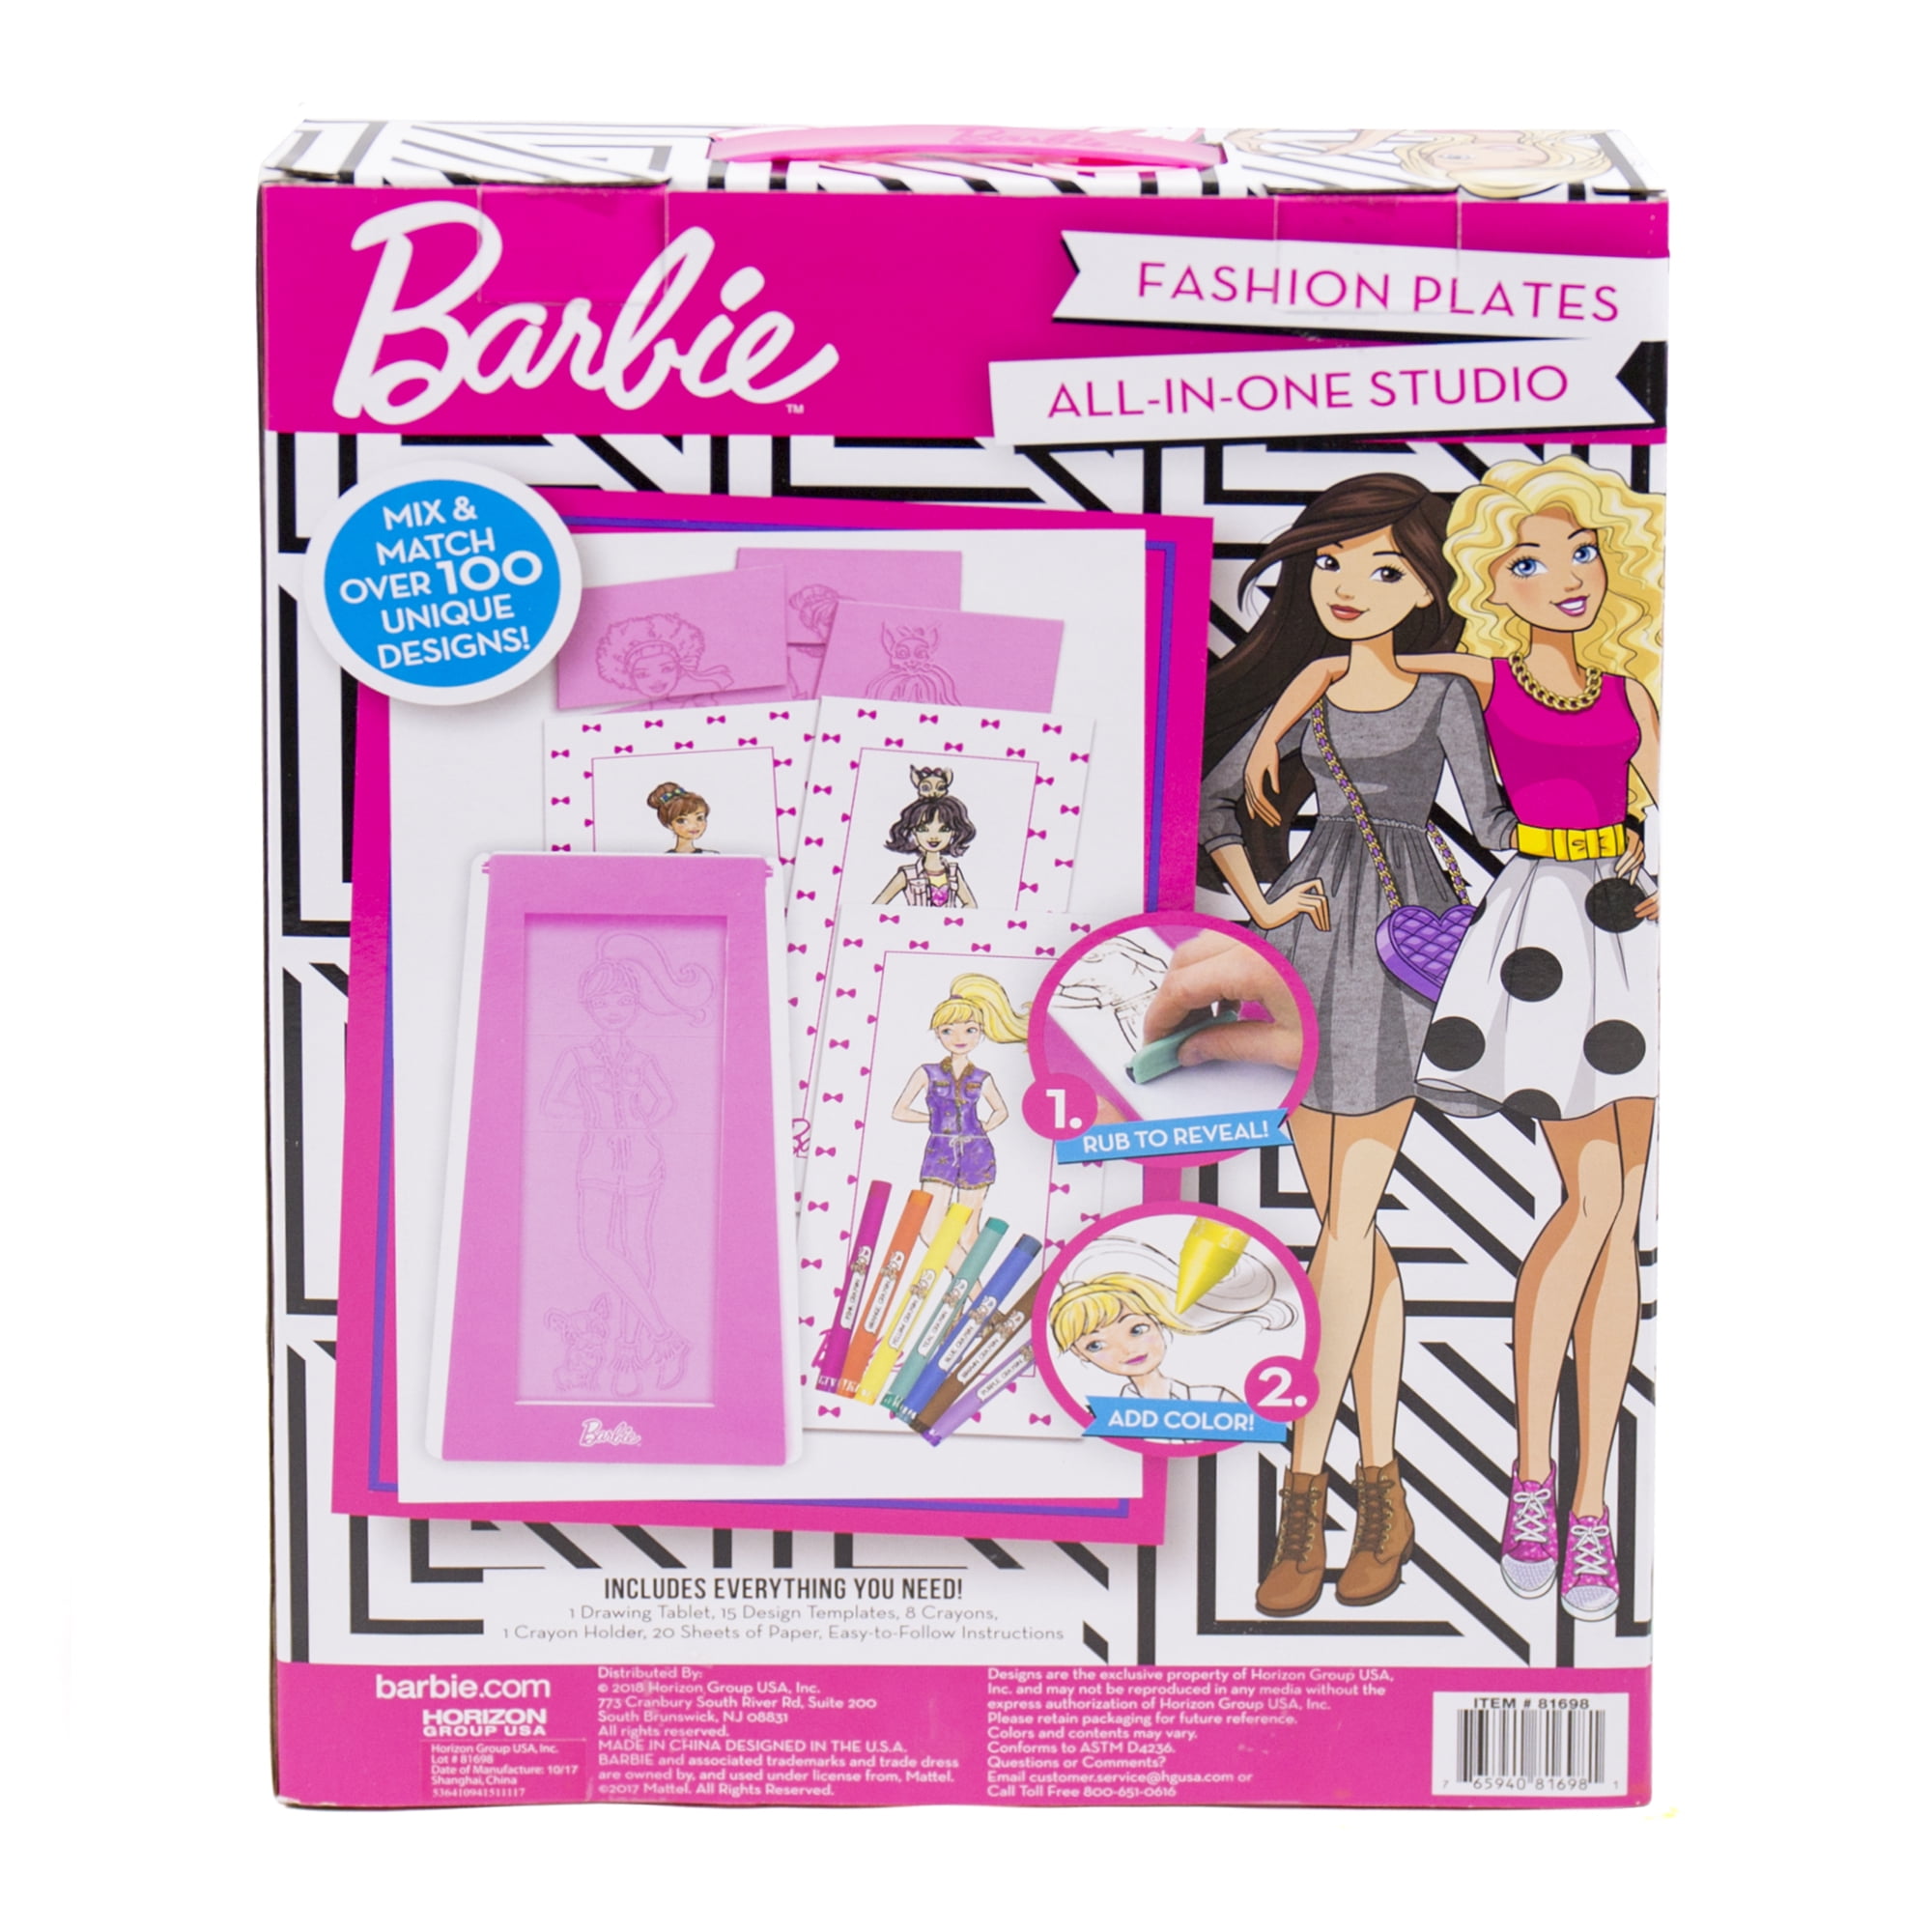 Barbie Mix and Match Fashion Plates, Art & Craft Kits, Boys and